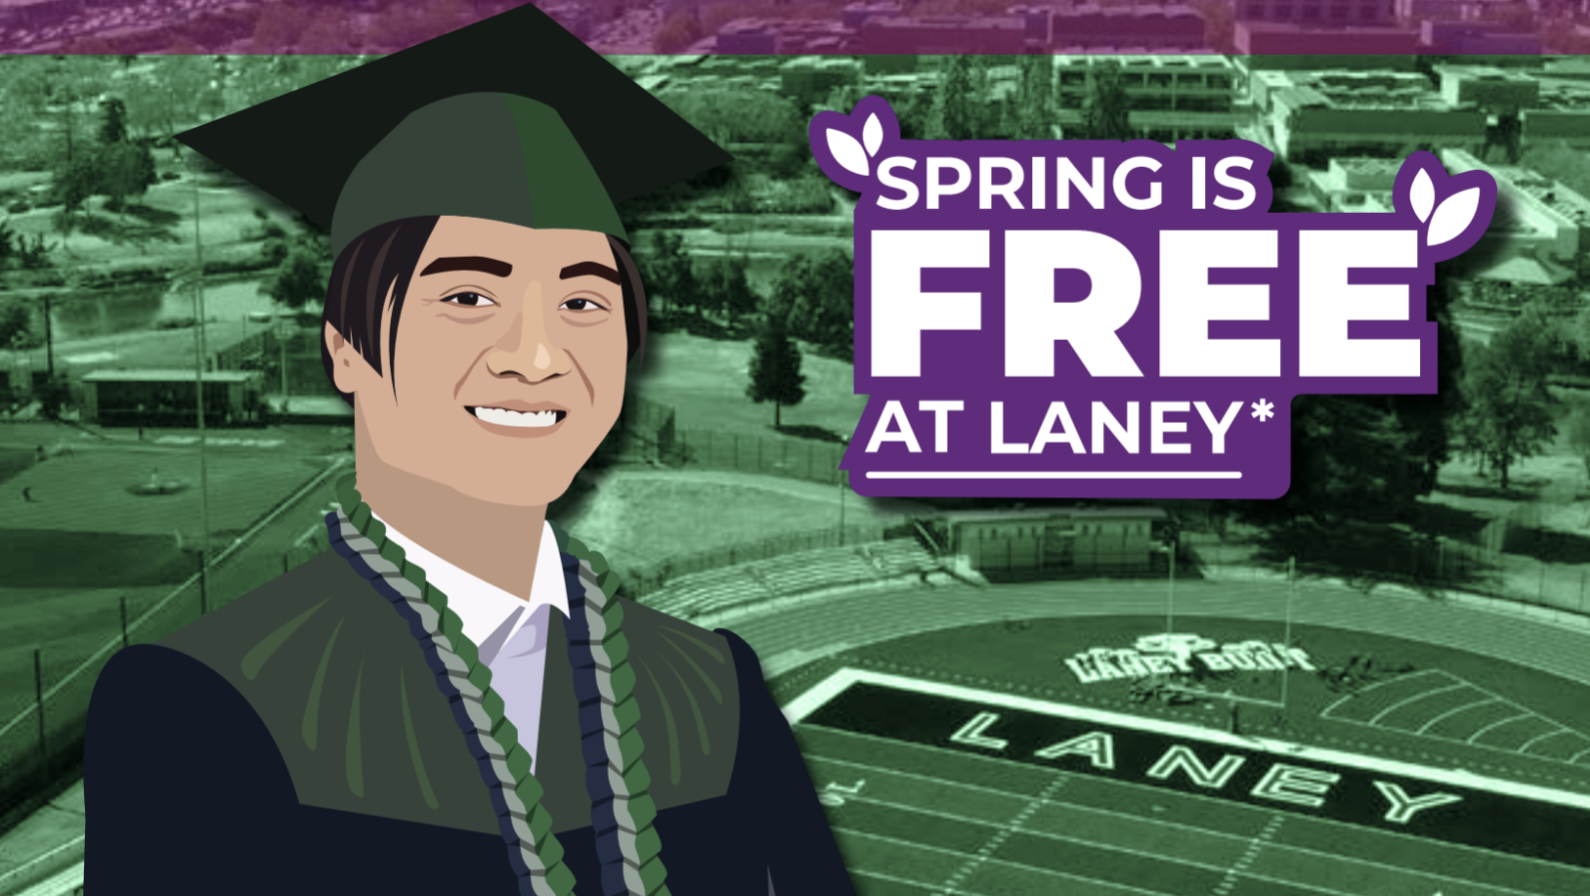 Spring is free at Laney